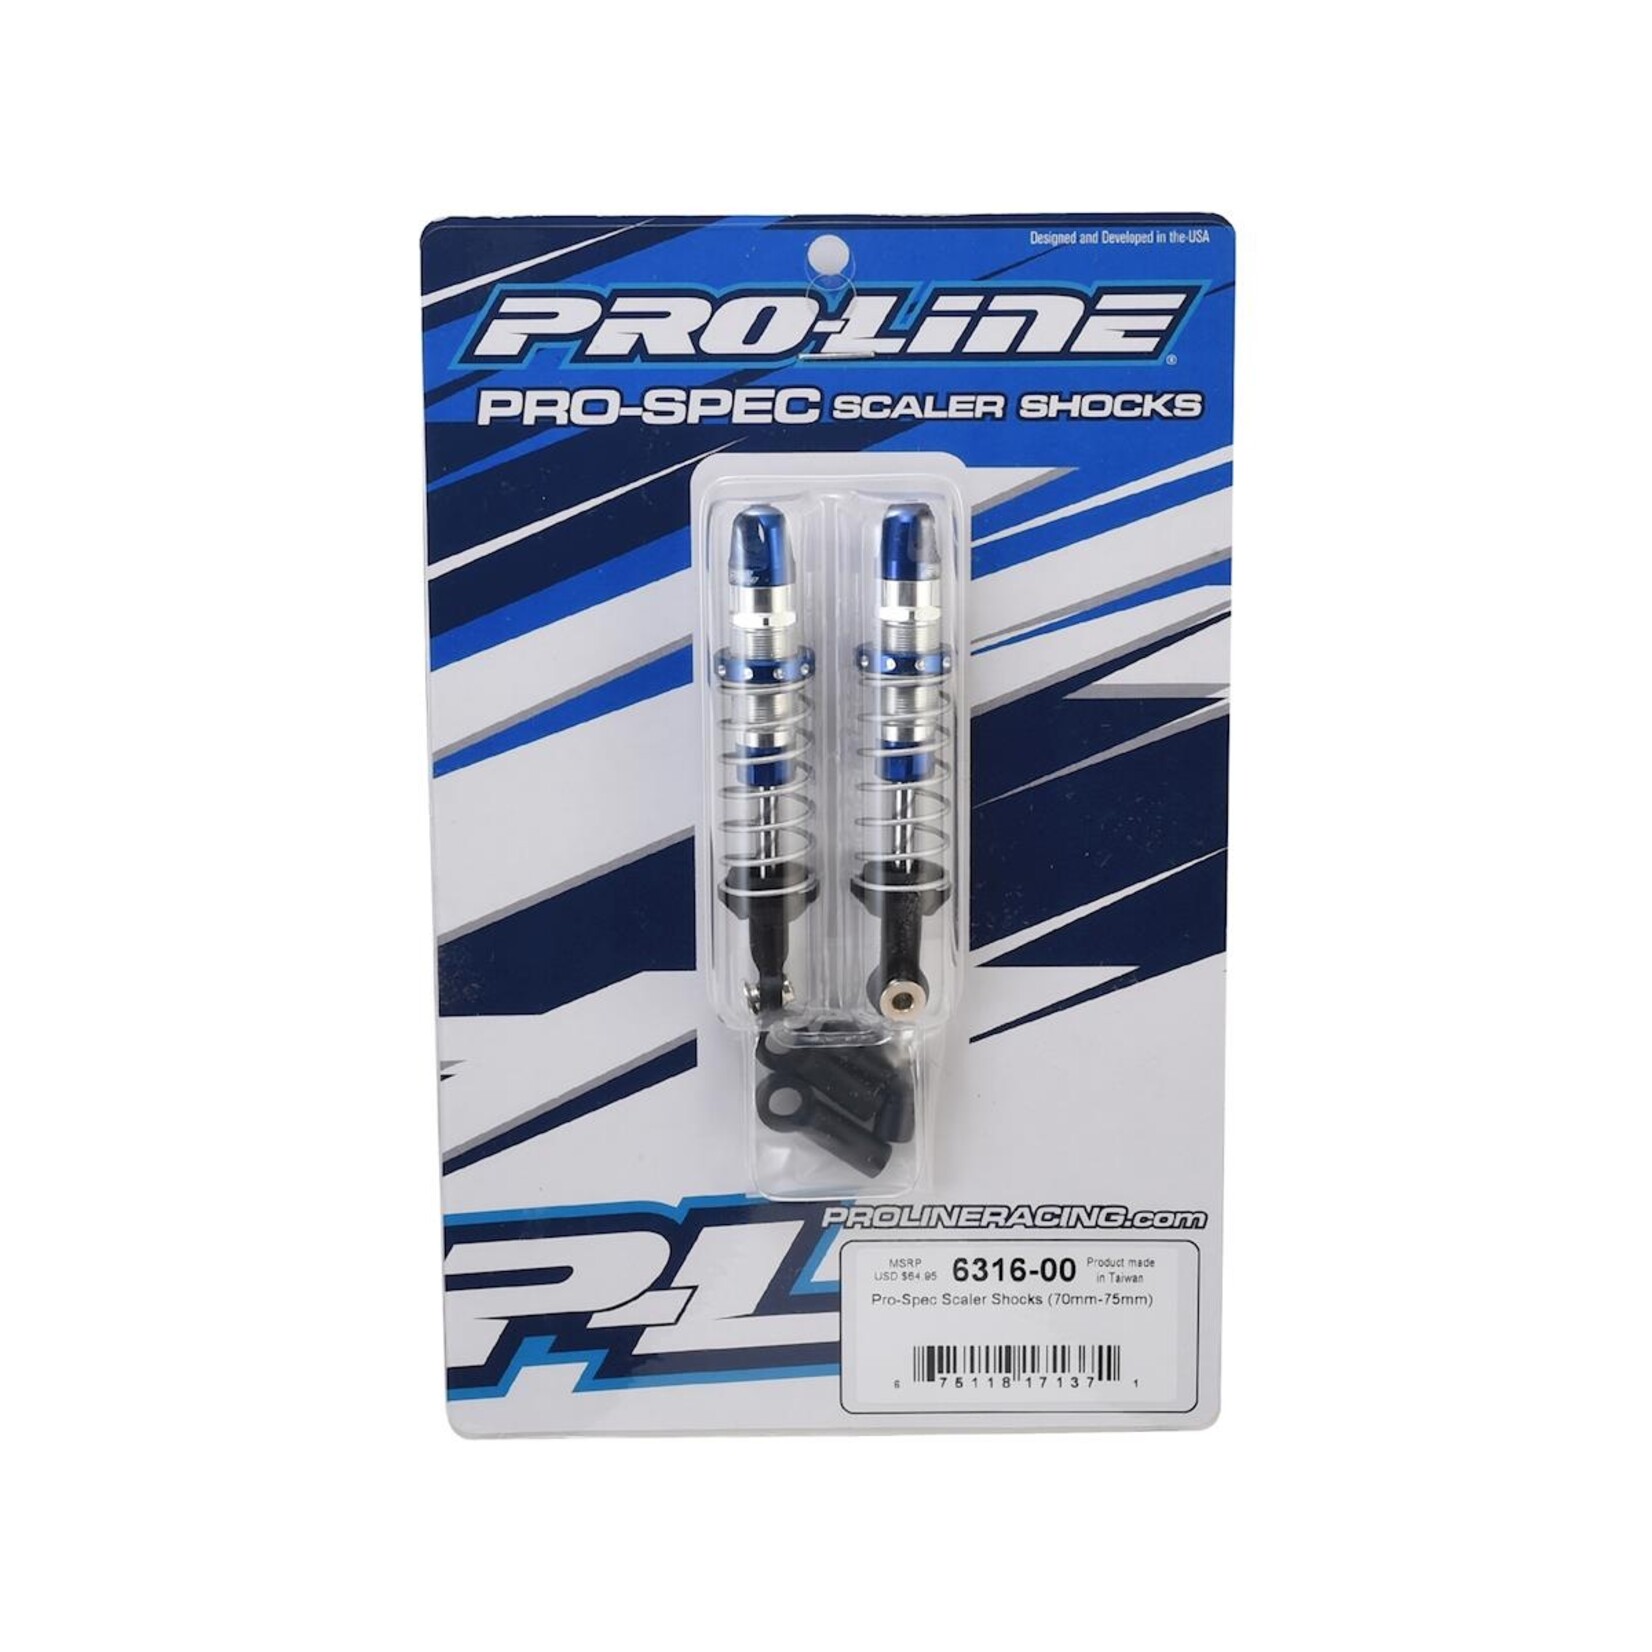 Pro-Line Pro-Line Pro-Spec Scaler Shocks (70mm-75mm) #6316-00